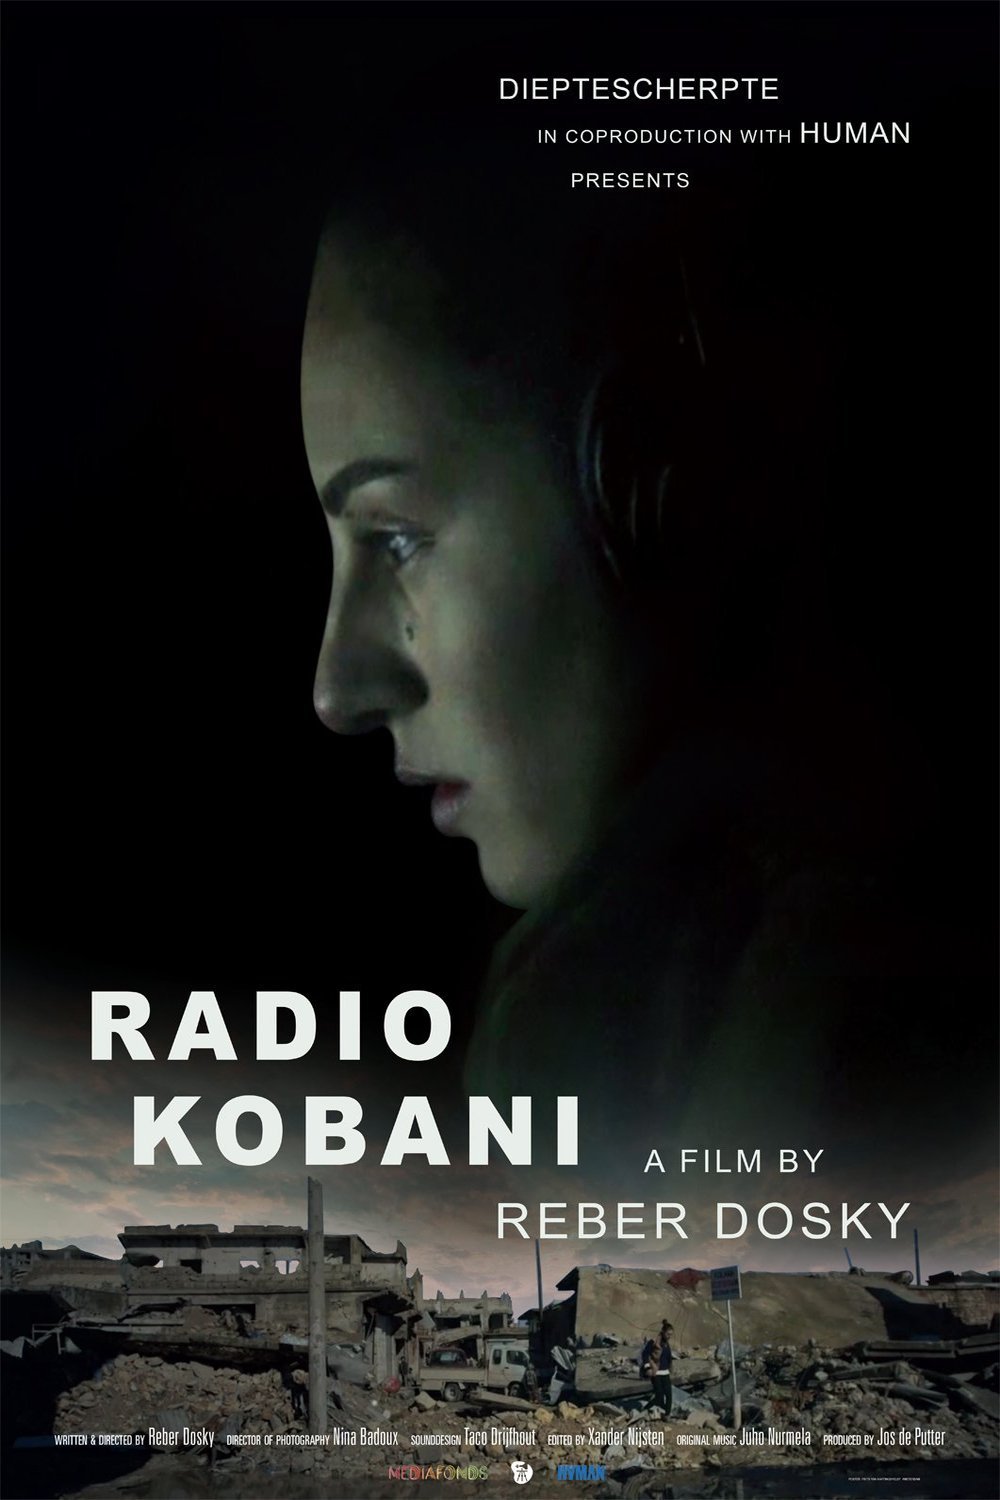 Kurdish poster of the movie Radio Kobanî